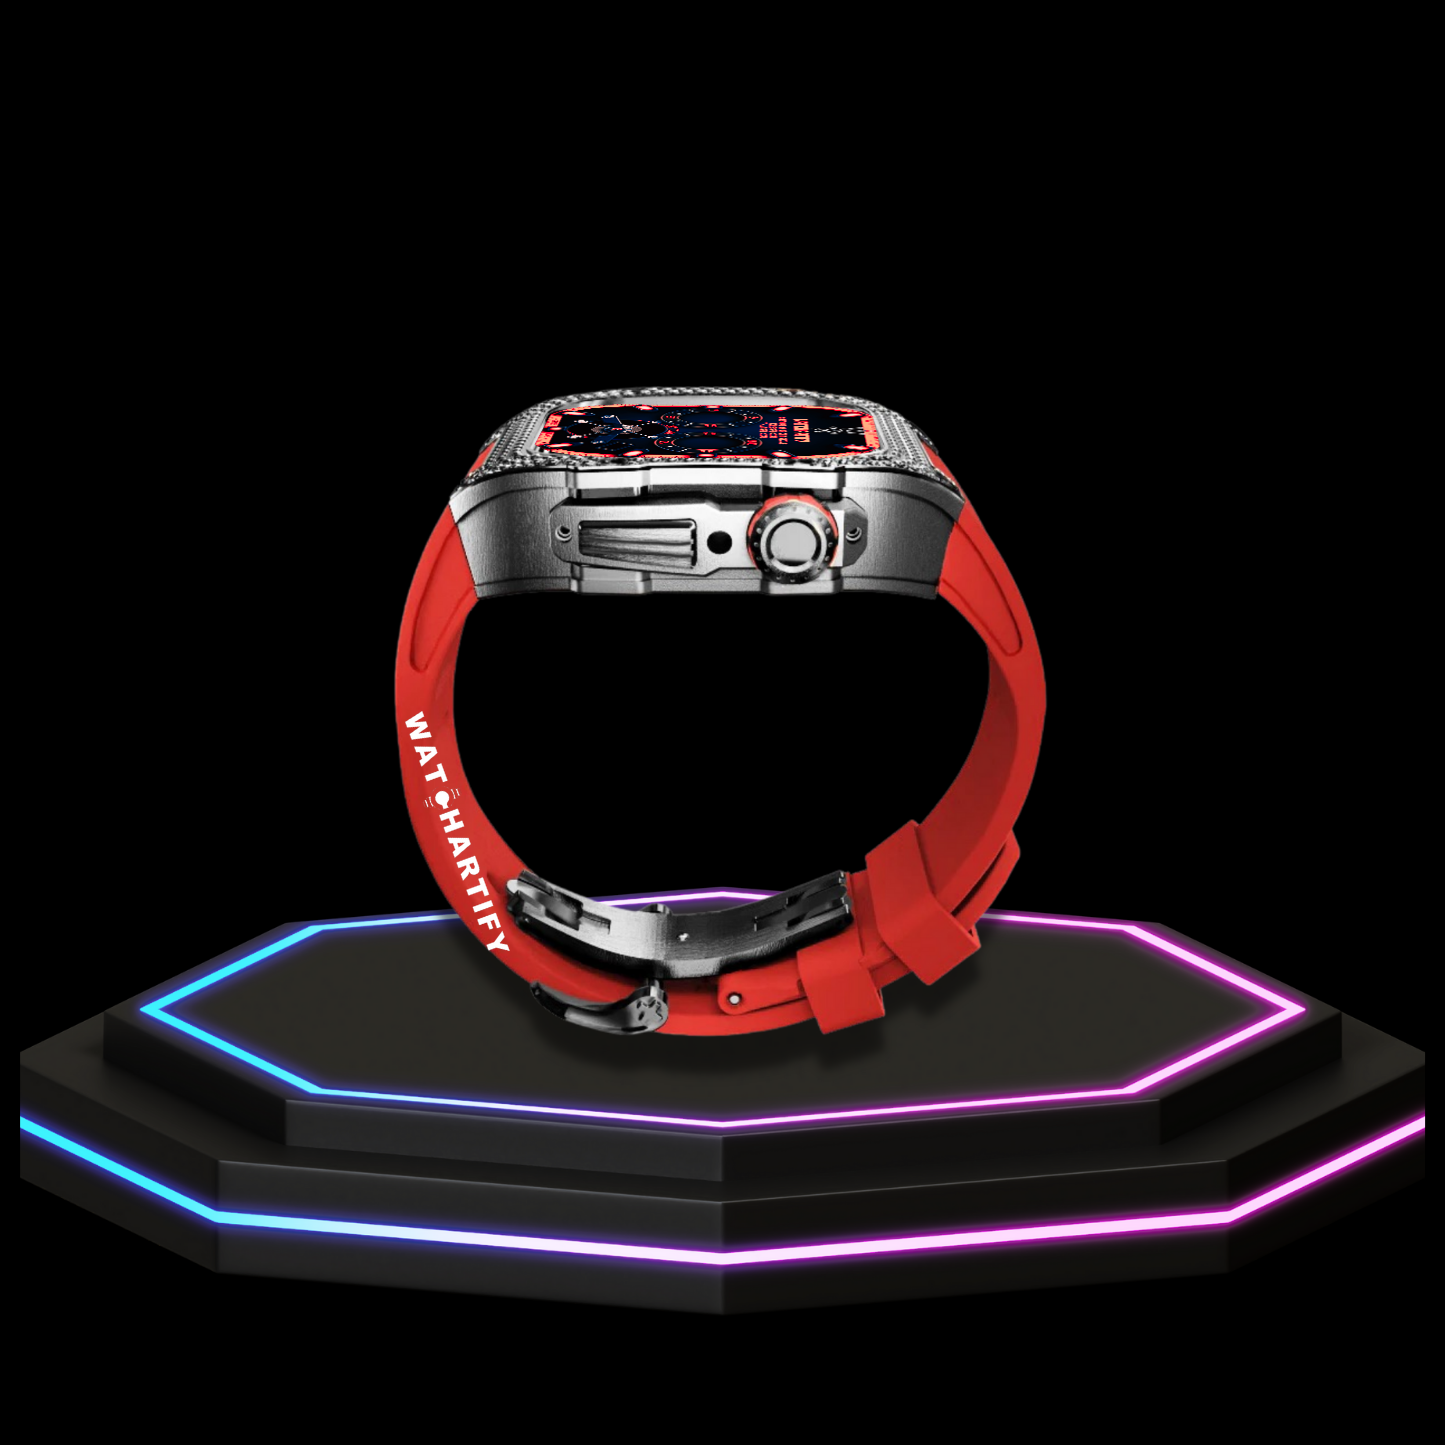 Apple Watch Case 44MM - Crystal TITAN Series Dark | Scarlet Red Rubber